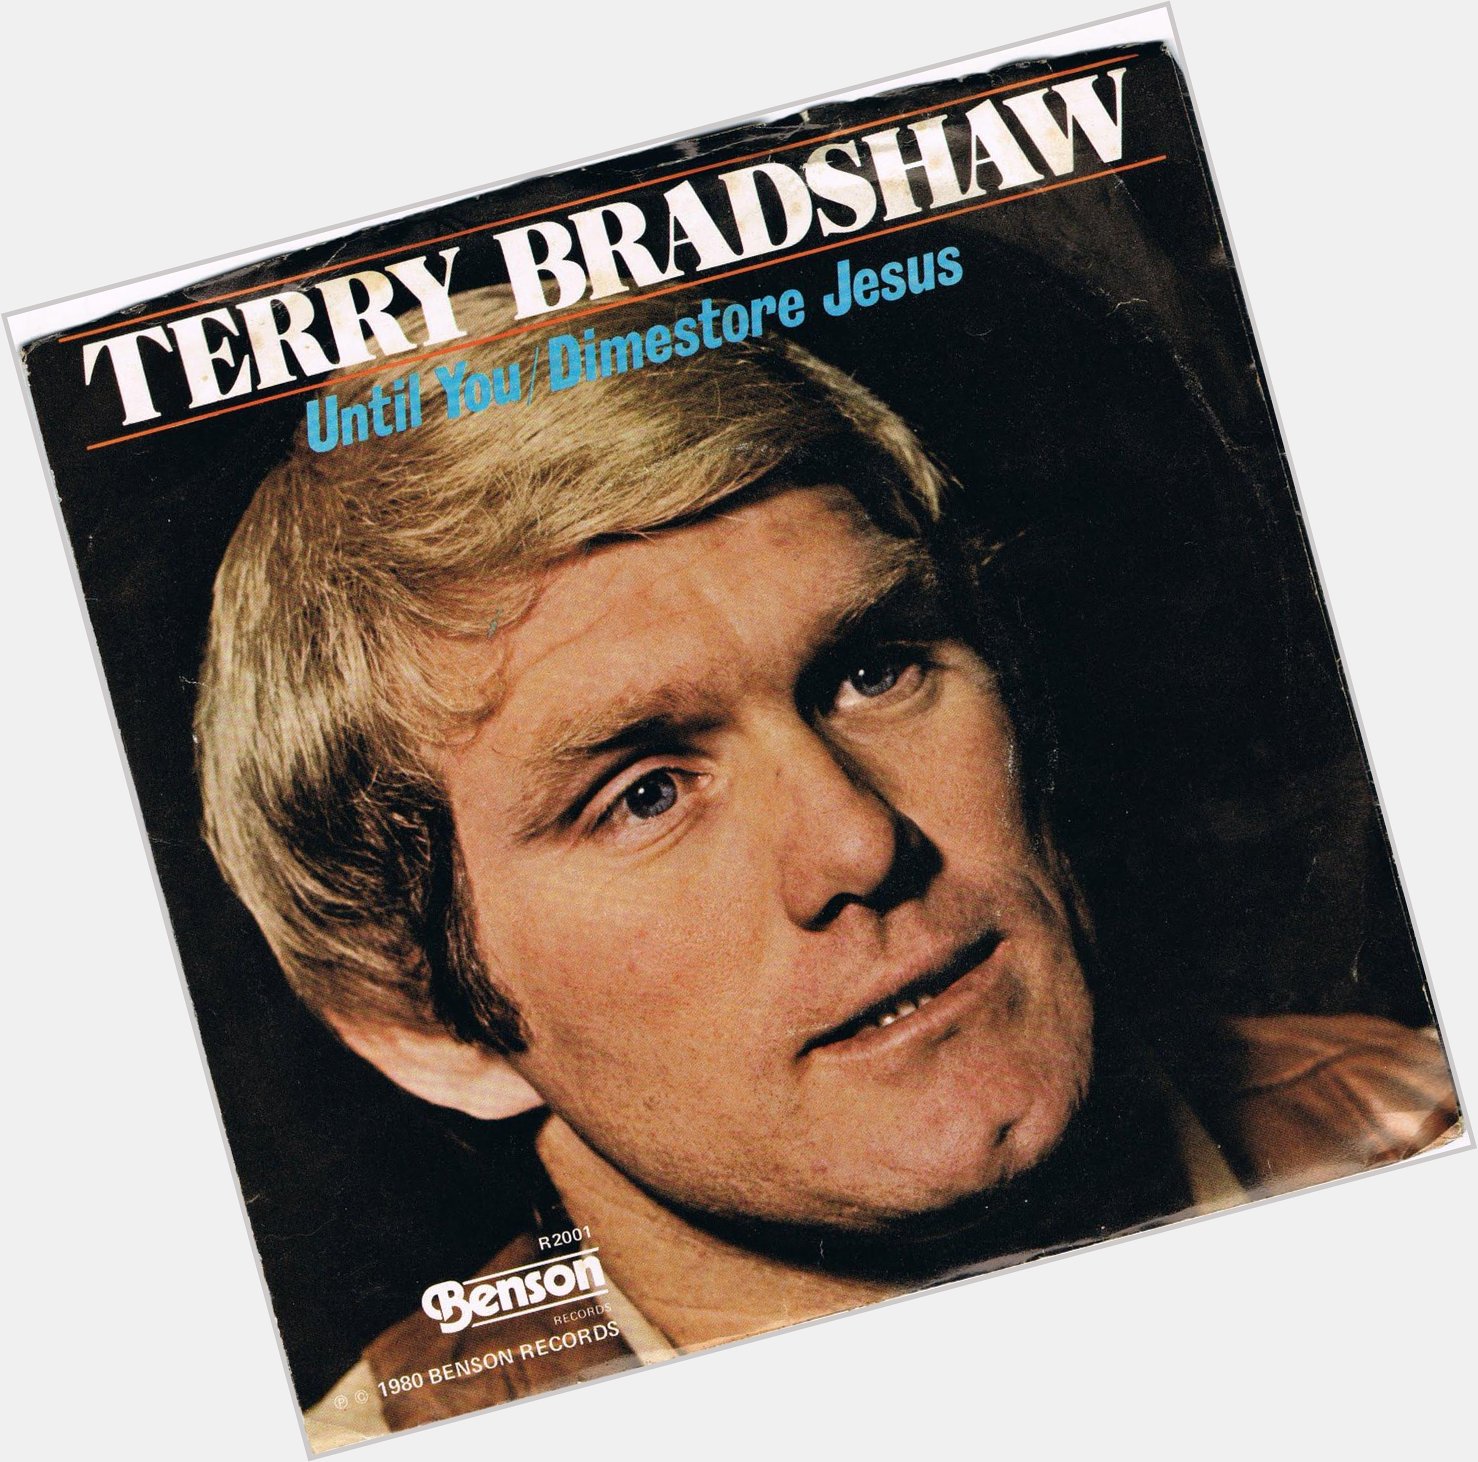 Happy birthday to the multitalented Terry Bradshaw. 